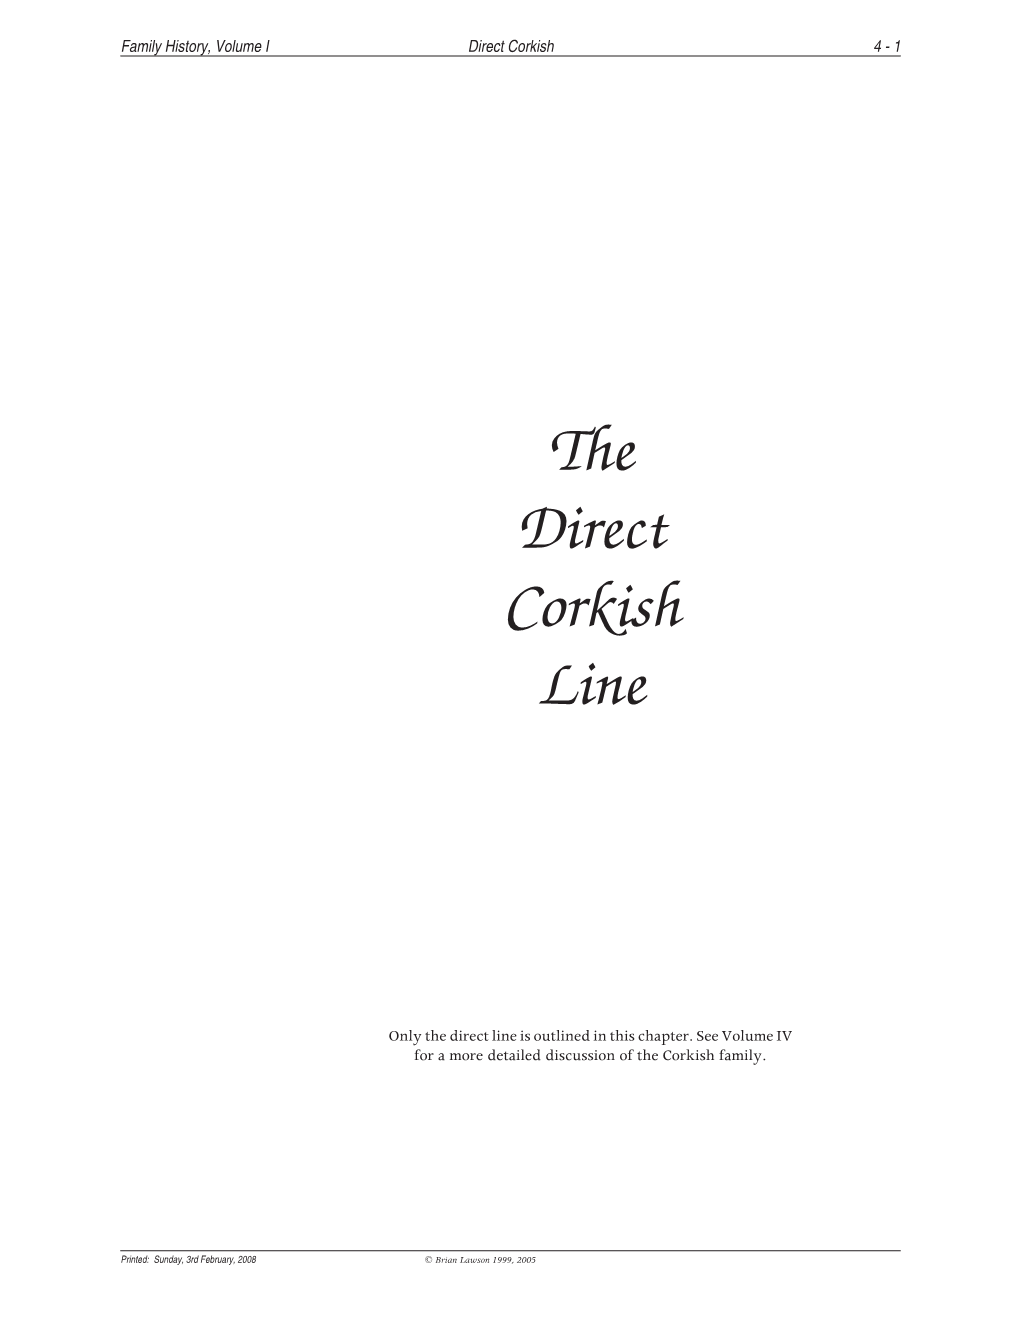 The Direct Corkish Line